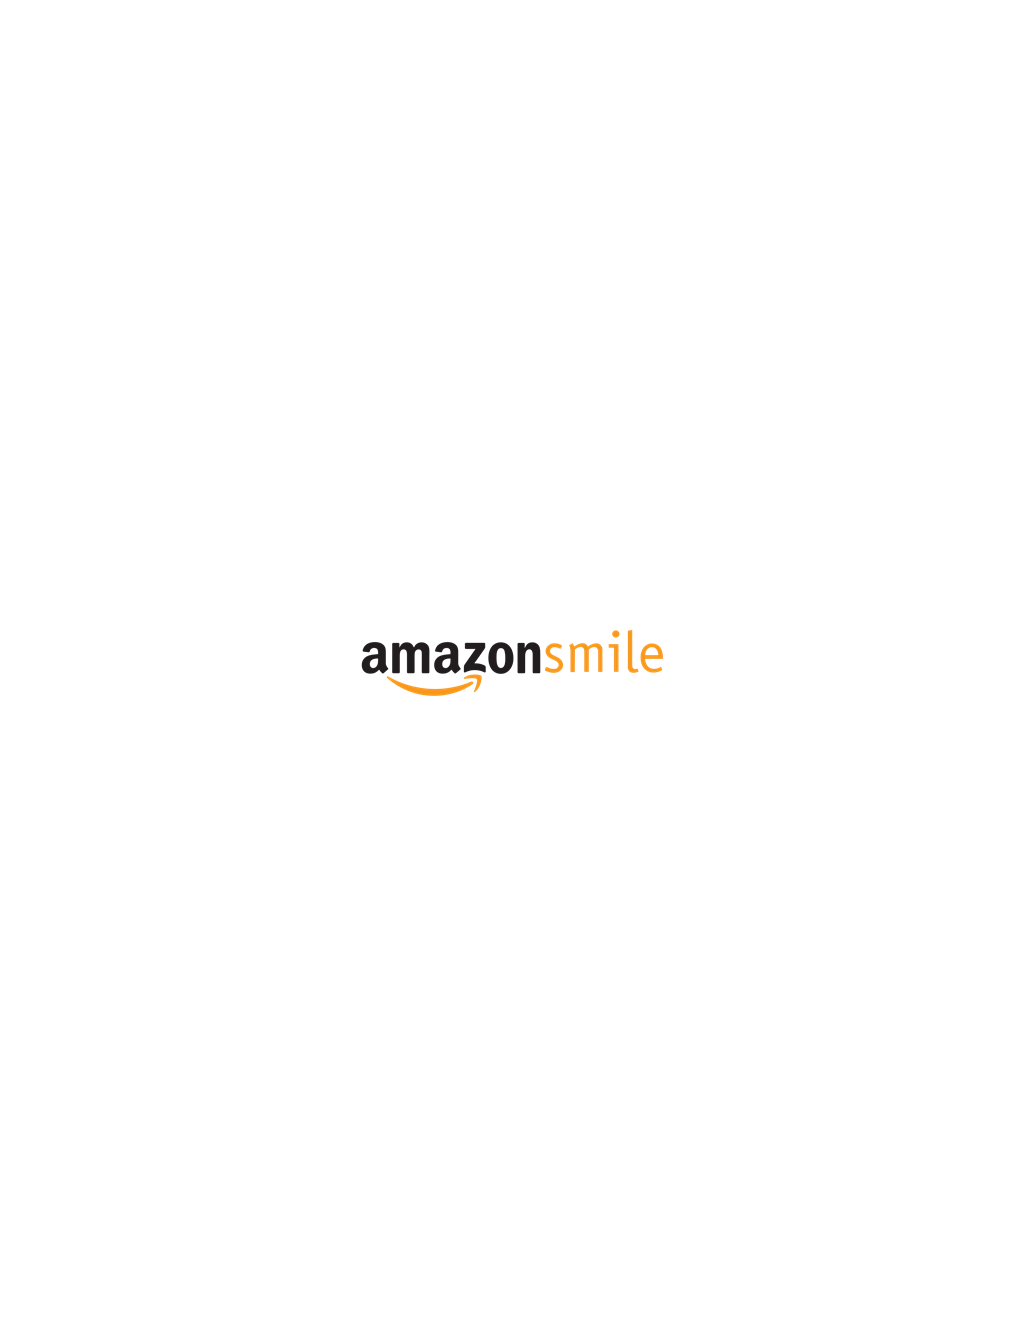 Amazon Smile logotype, transparent .png, medium, large